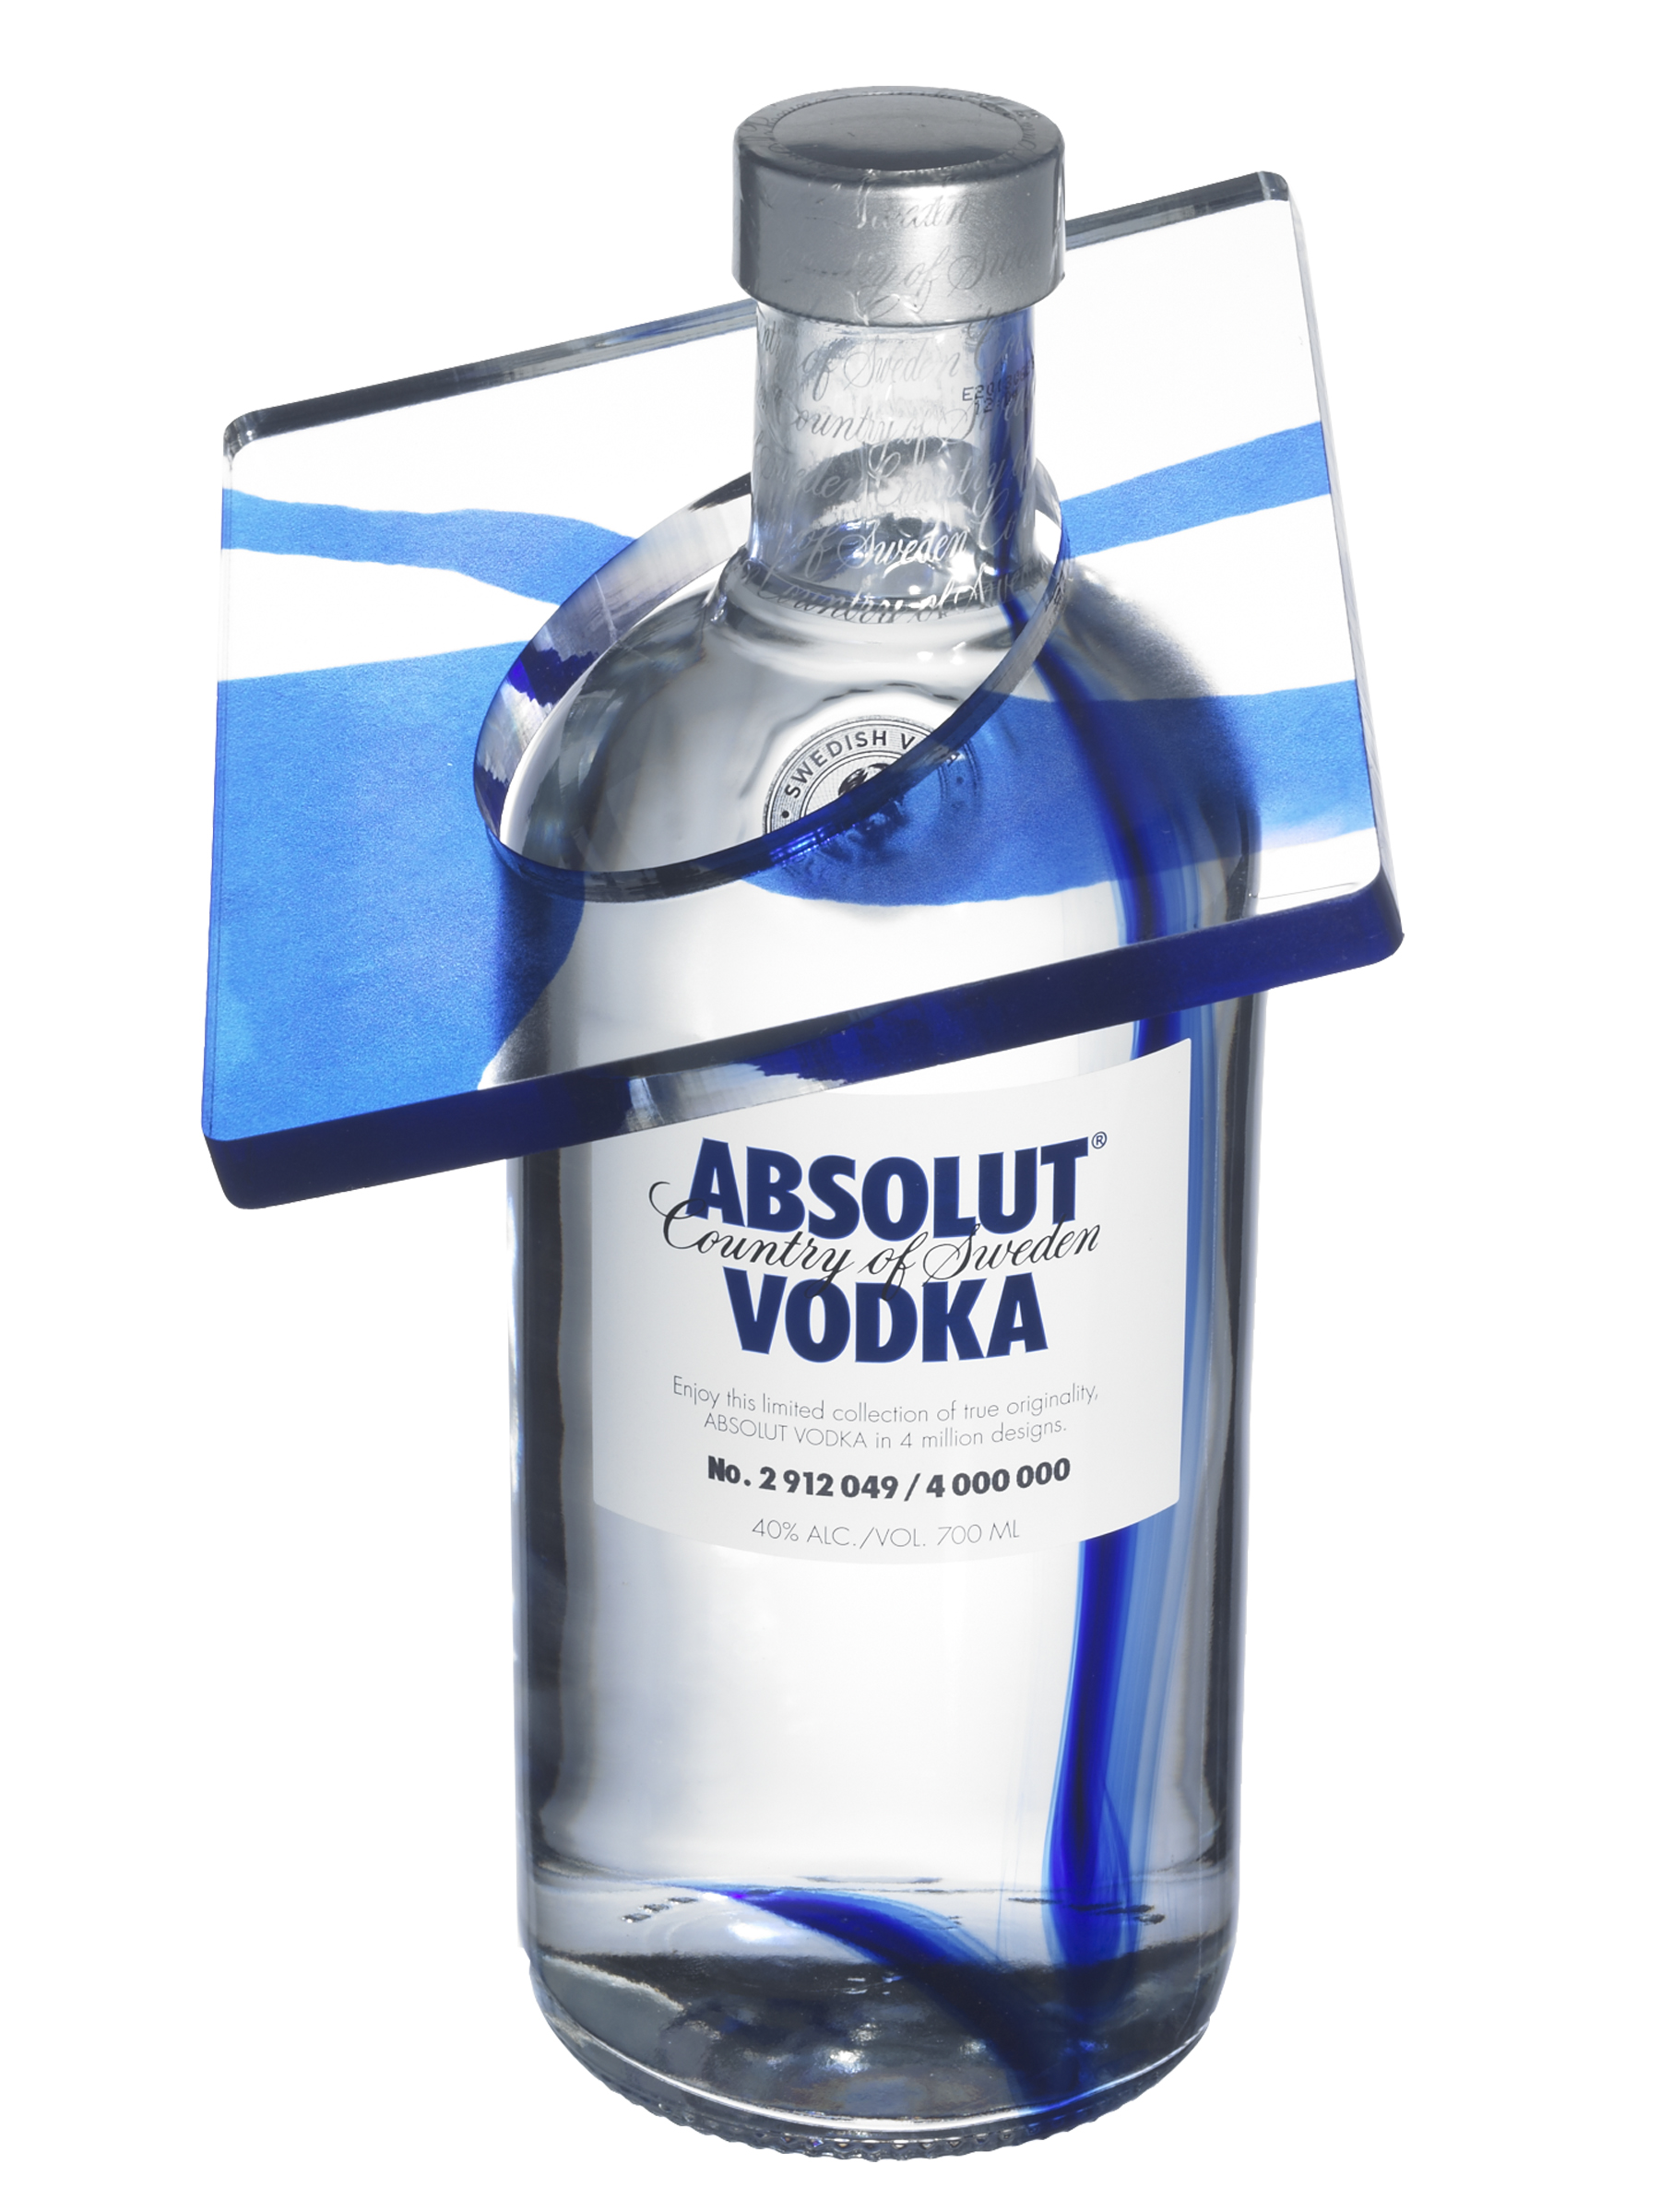 ABSOLUT vodka collaborates with Kitty Joseph